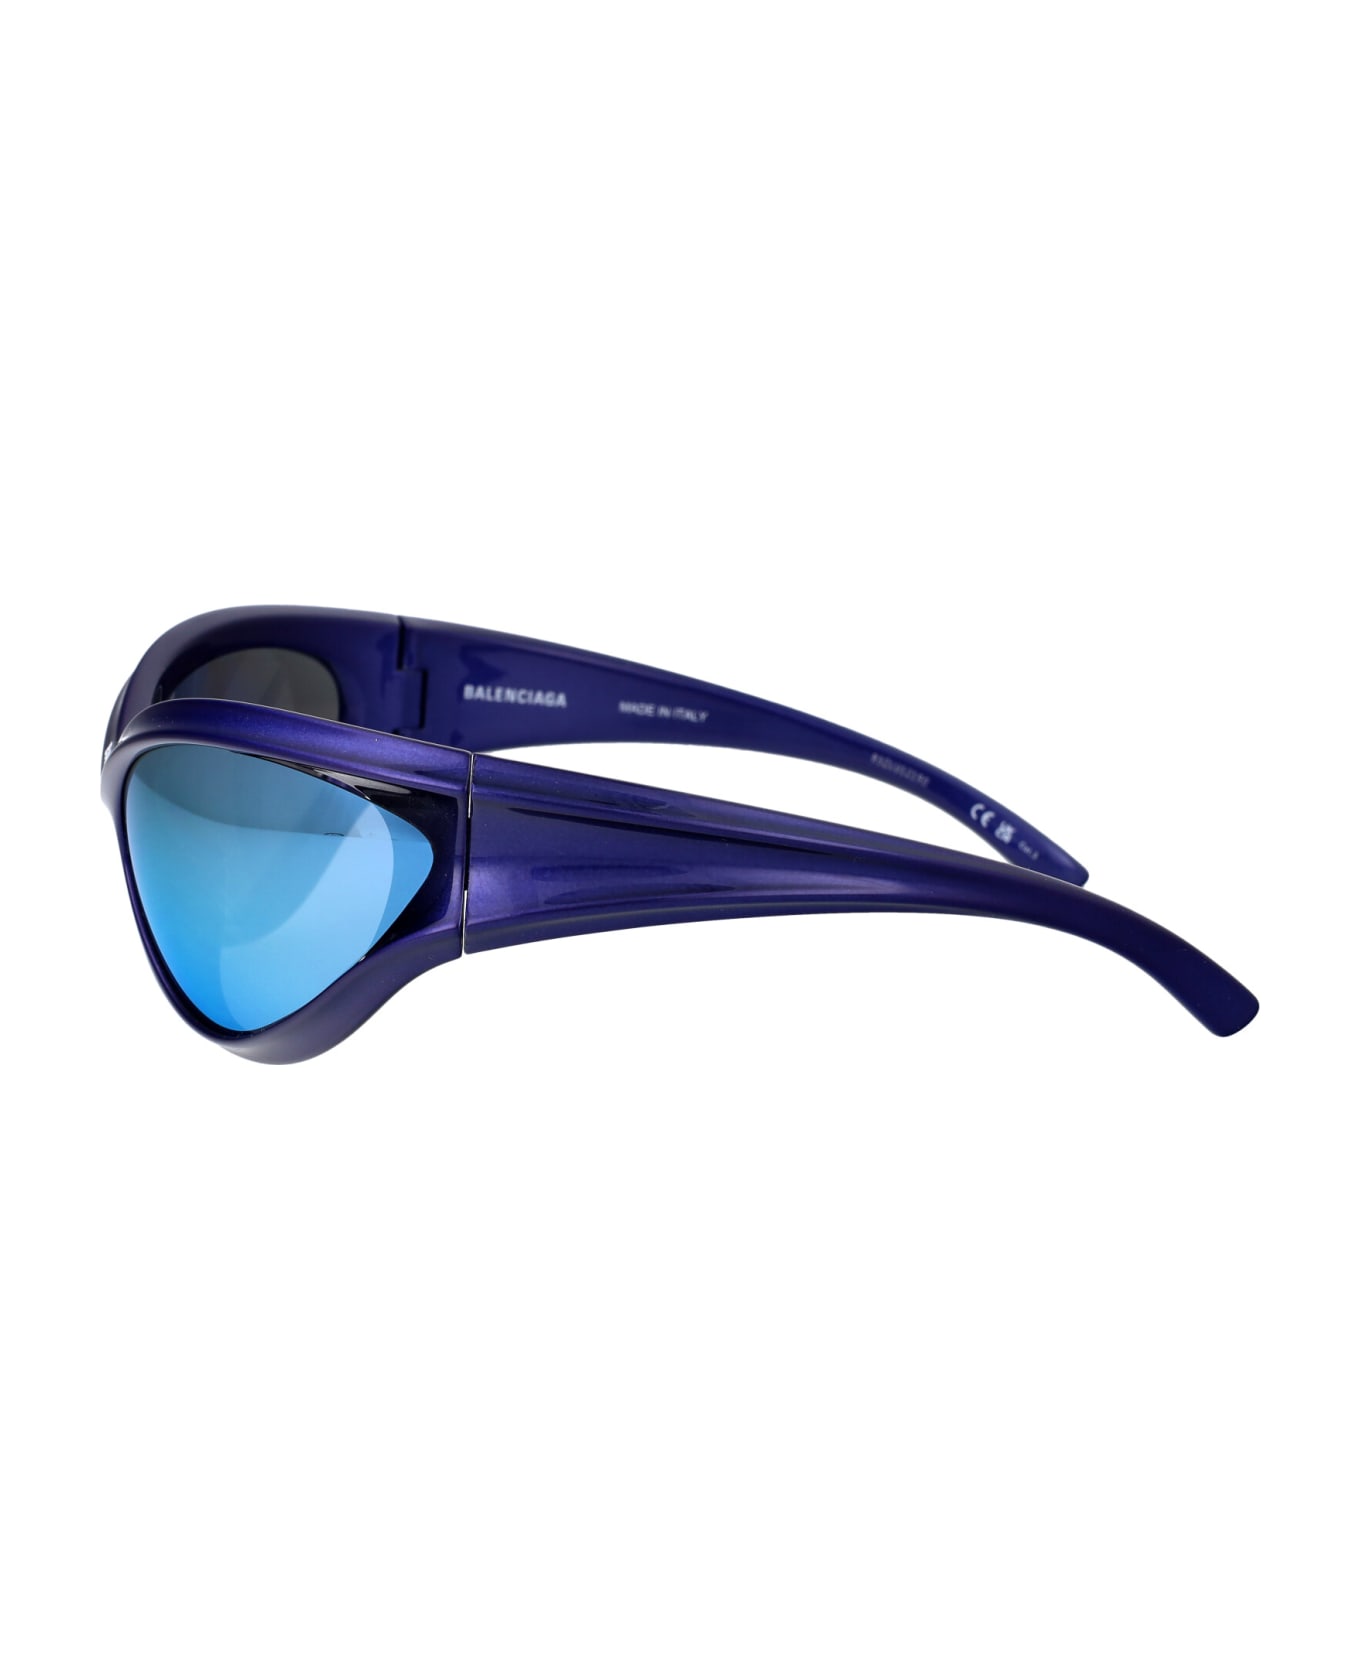 Balenciaga Eyewear Bb0317s Sunglasses - 004 BLUE BLUE BLUE